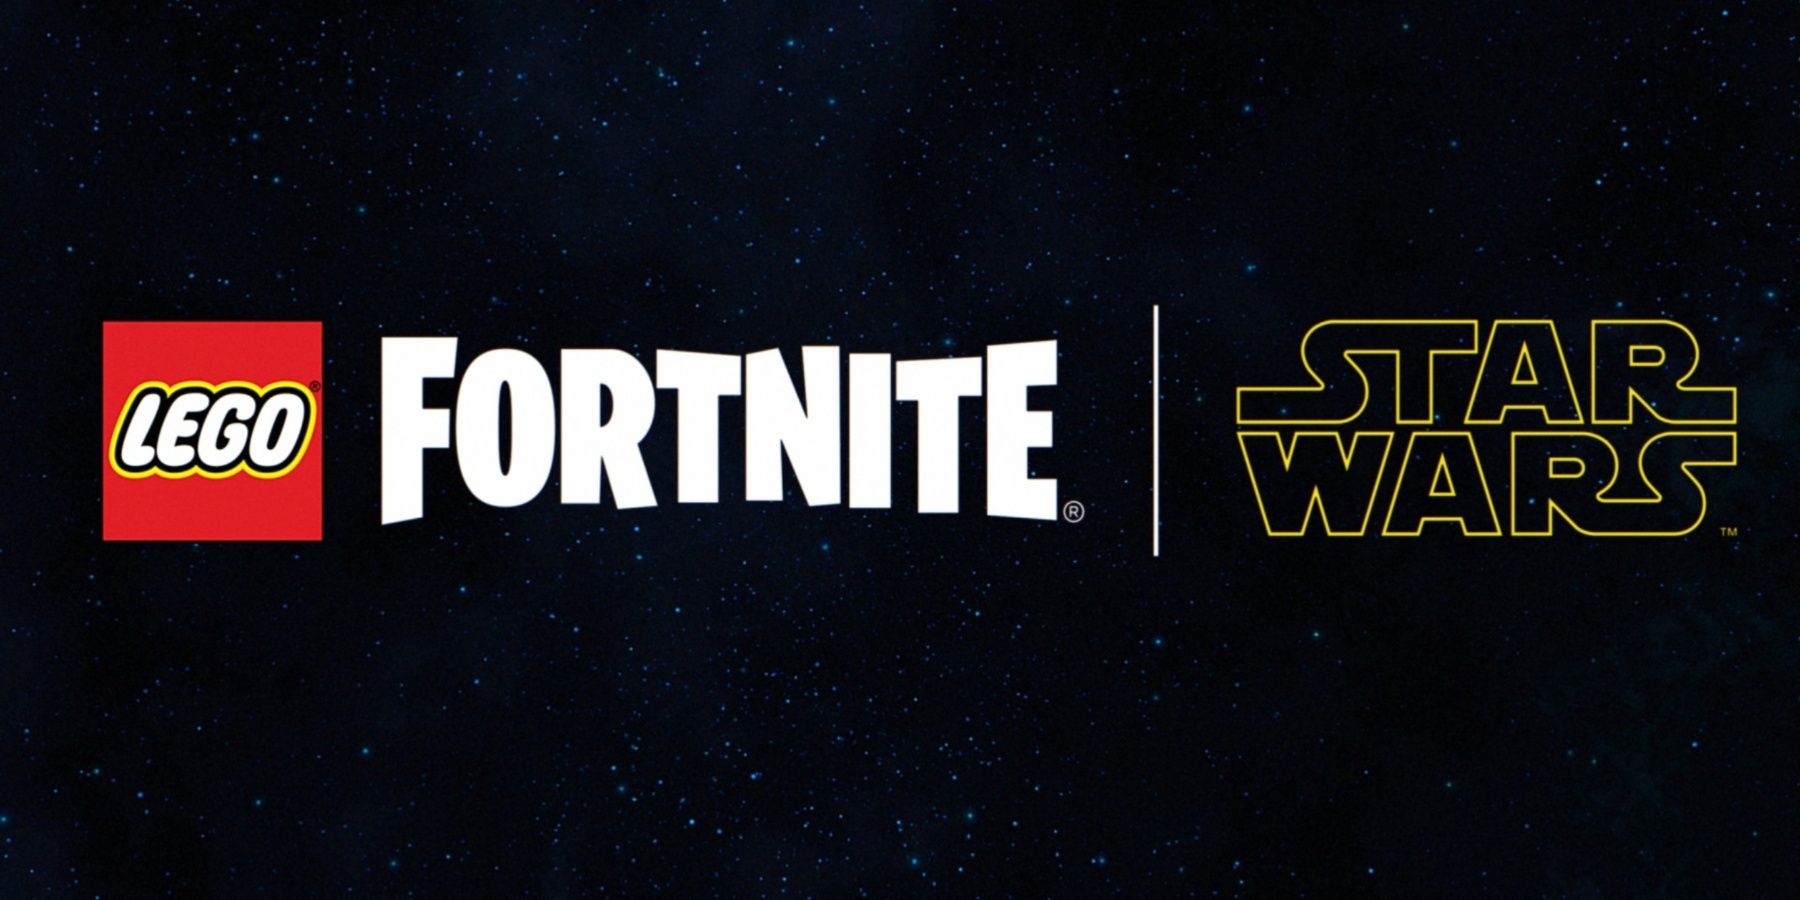 lego fortnite logo and star wars